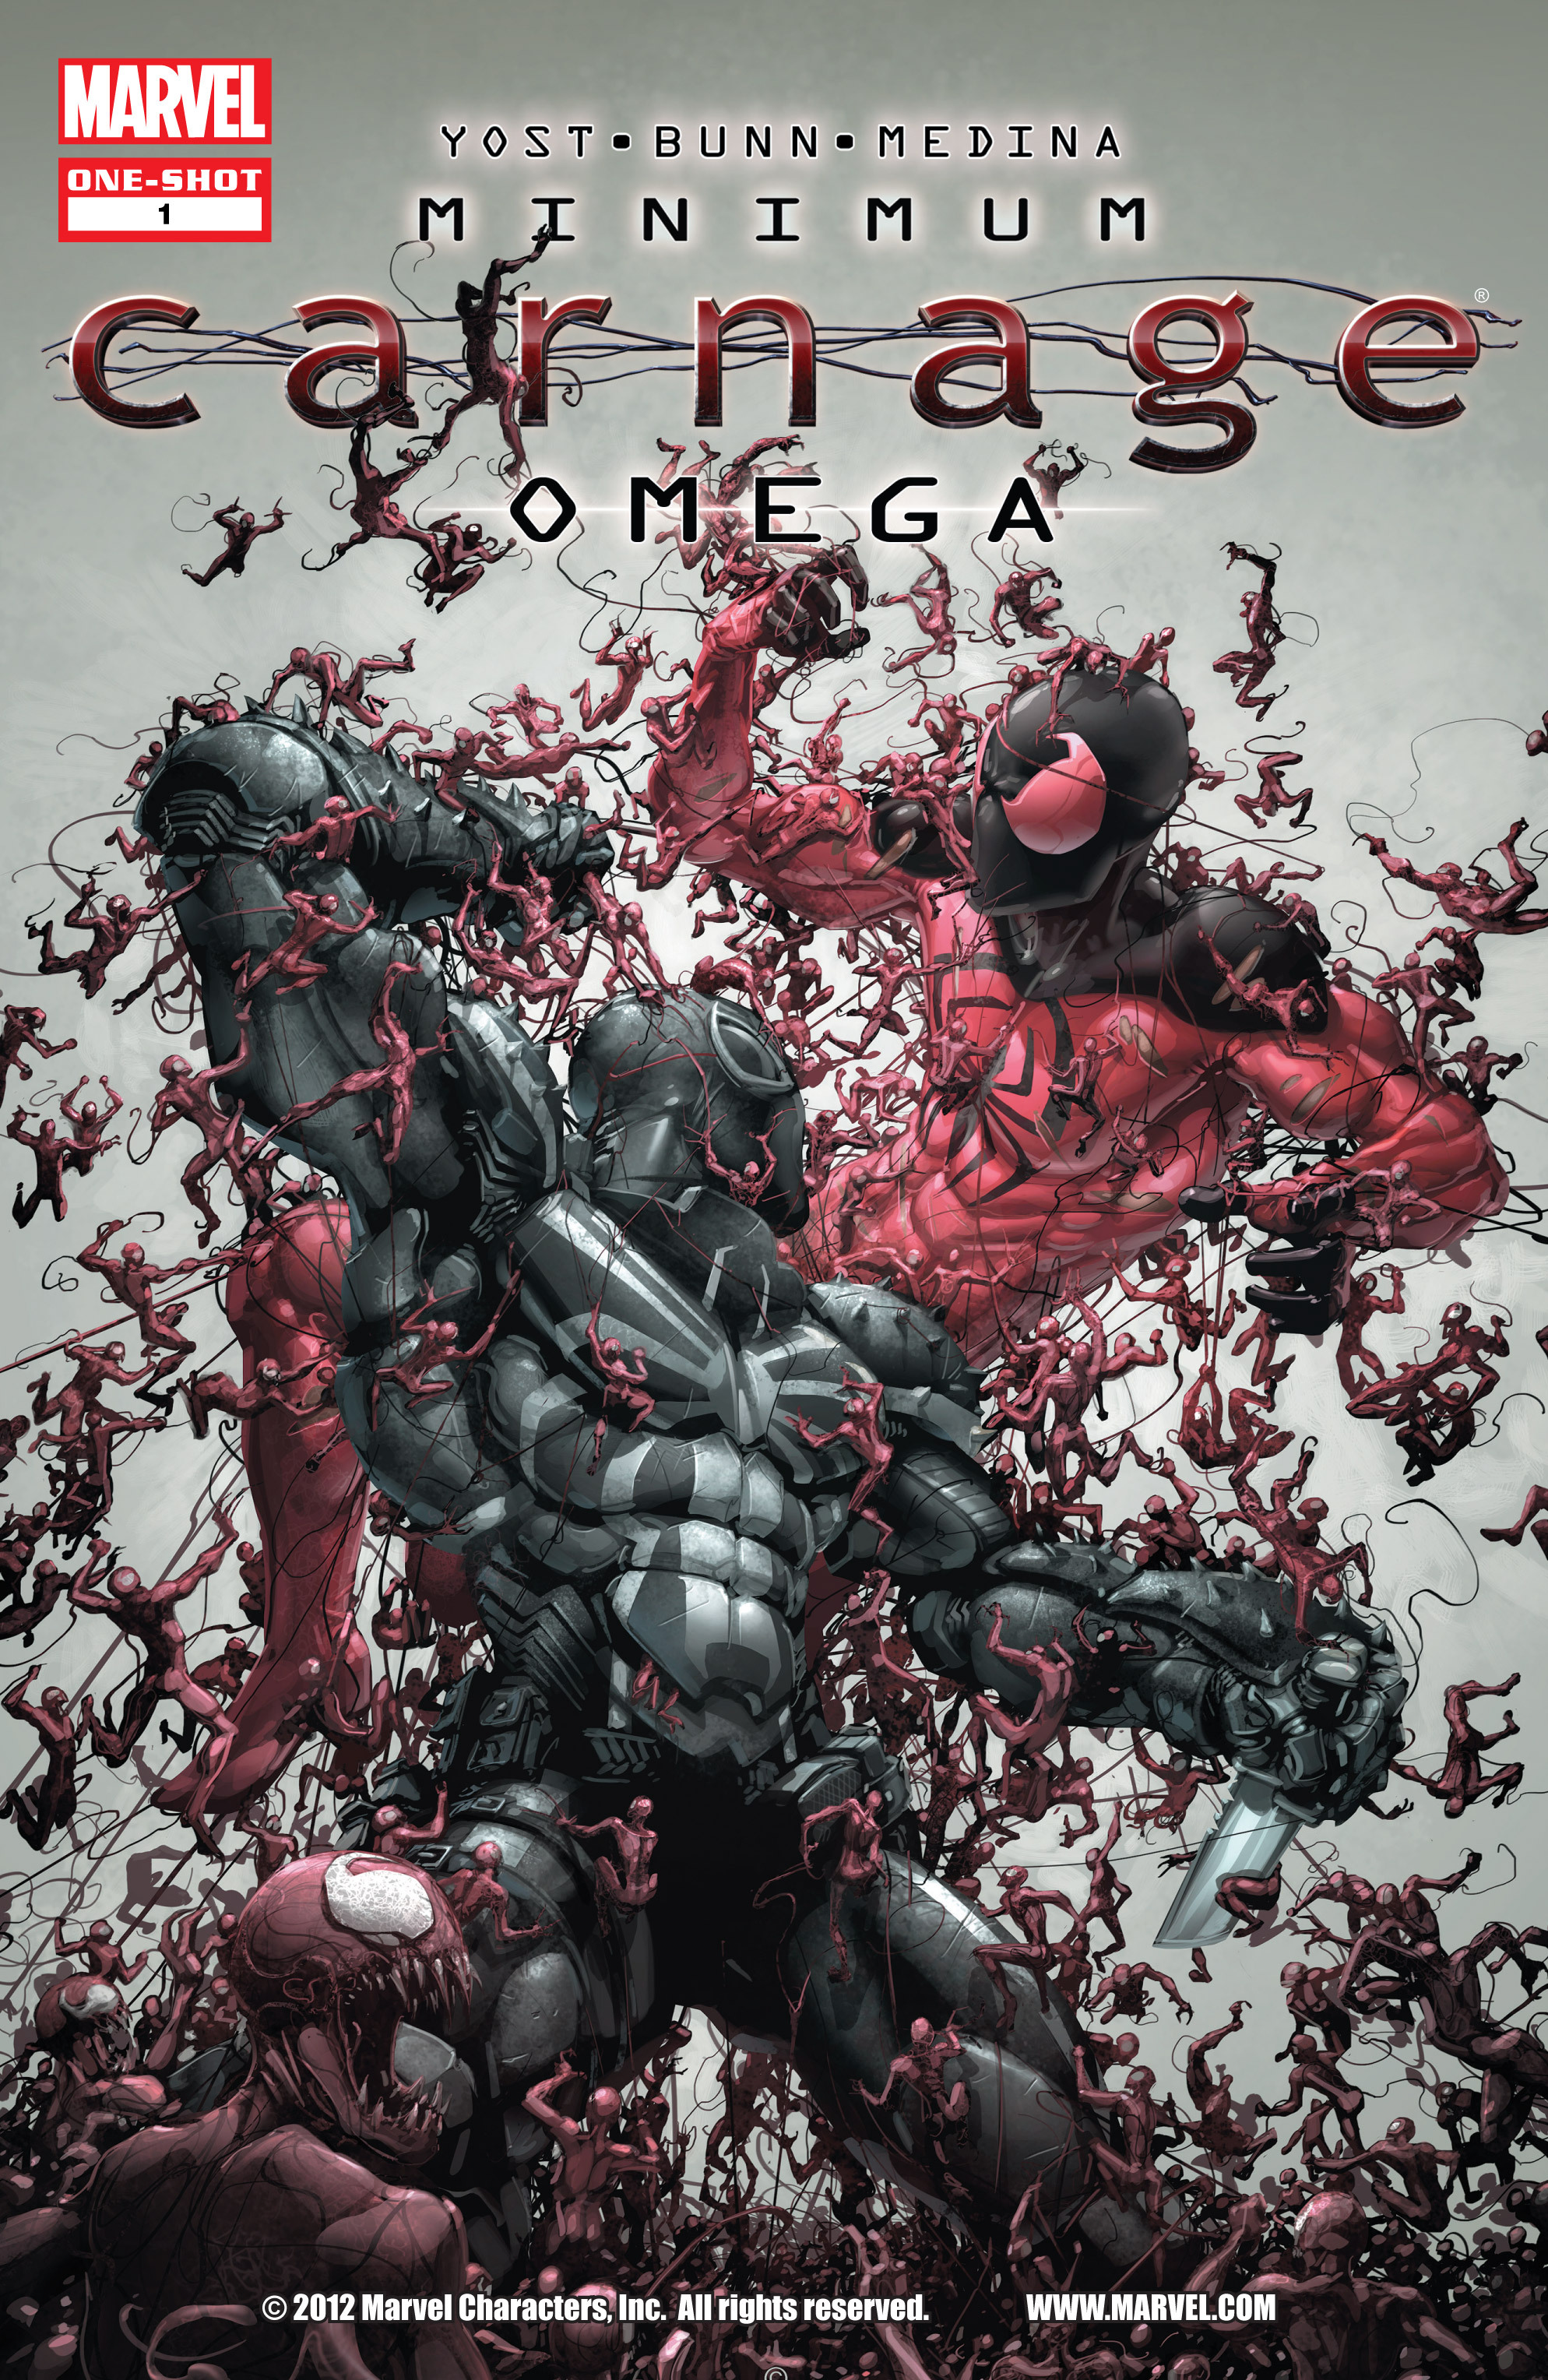 Read online Minimum Carnage: Omega comic -  Issue # Full - 1